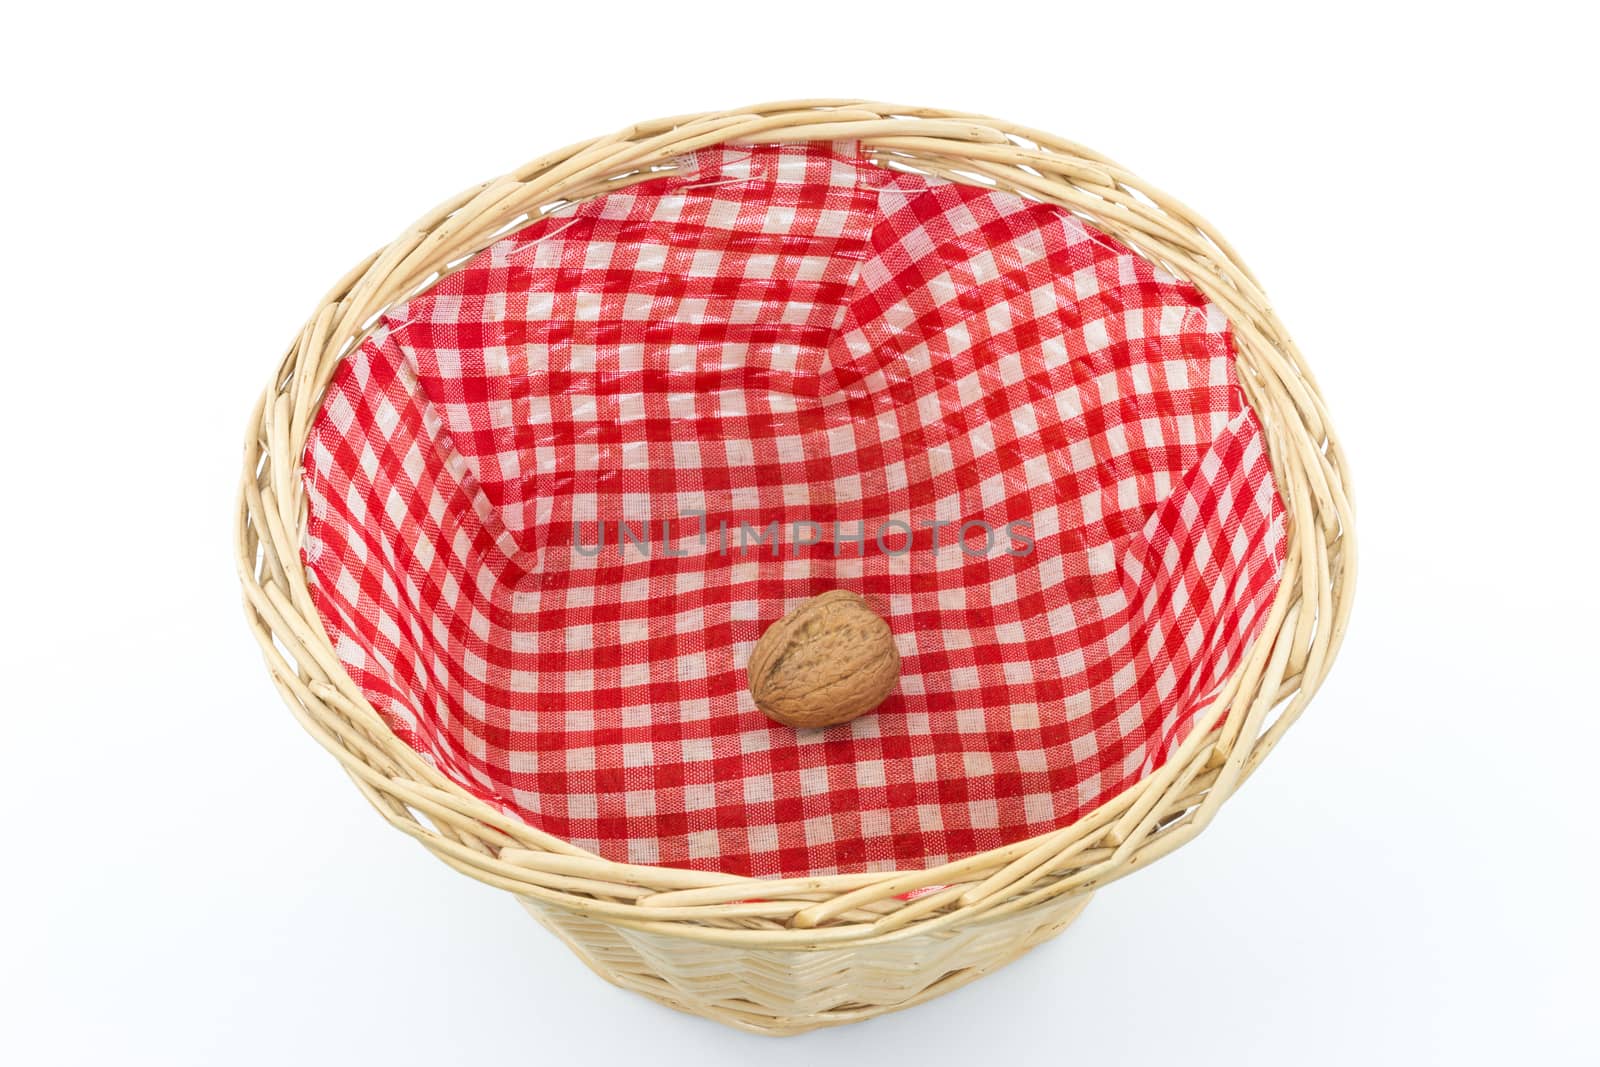 Almost empty small basket with one walnut